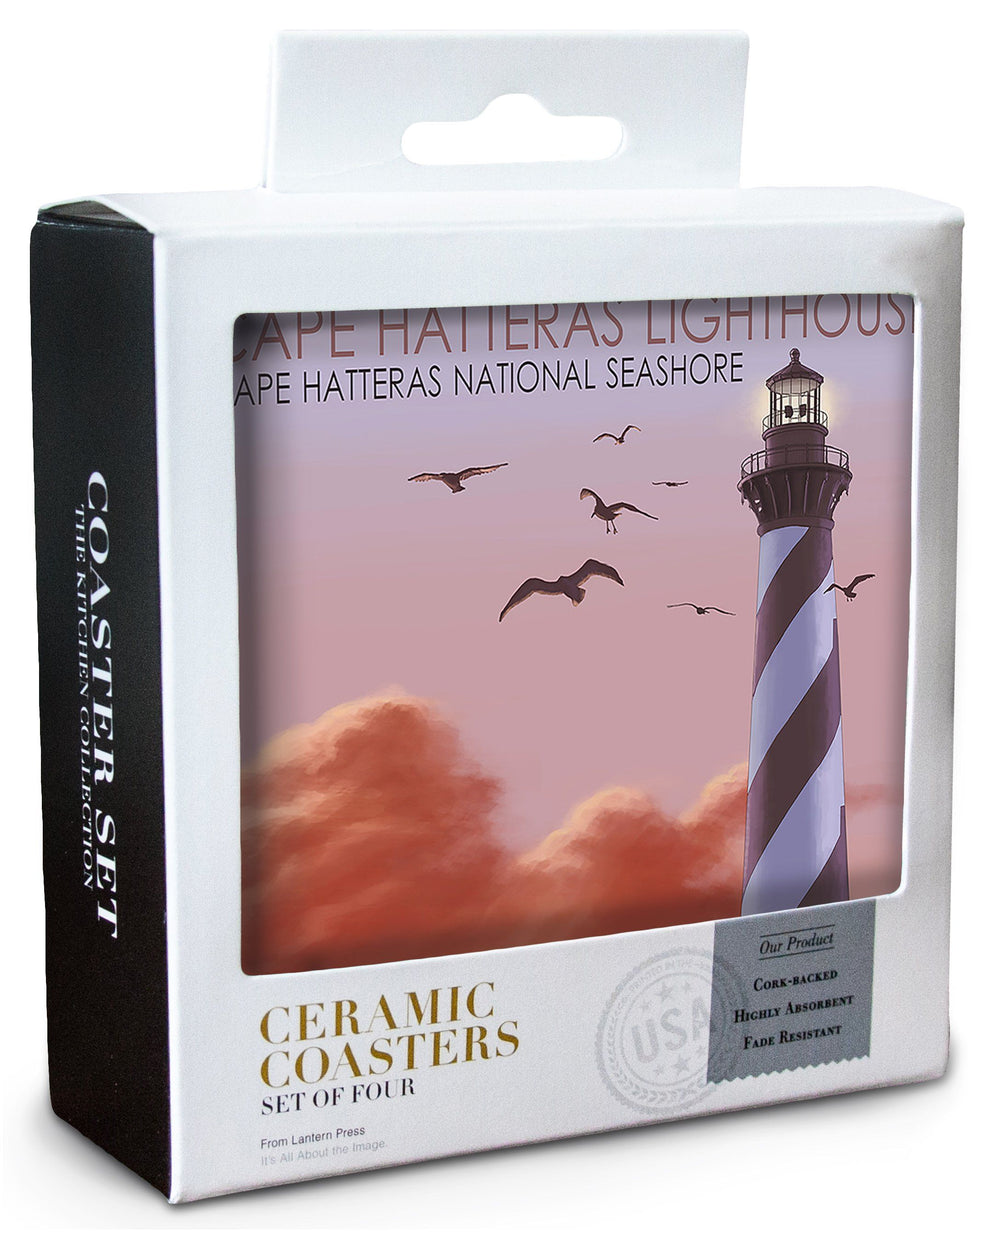 Outer Banks, North Carolina, Cape Hatteras Lighthouse, Sunrise, Lantern Press Artwork, Coaster Set Coasters Lantern Press 